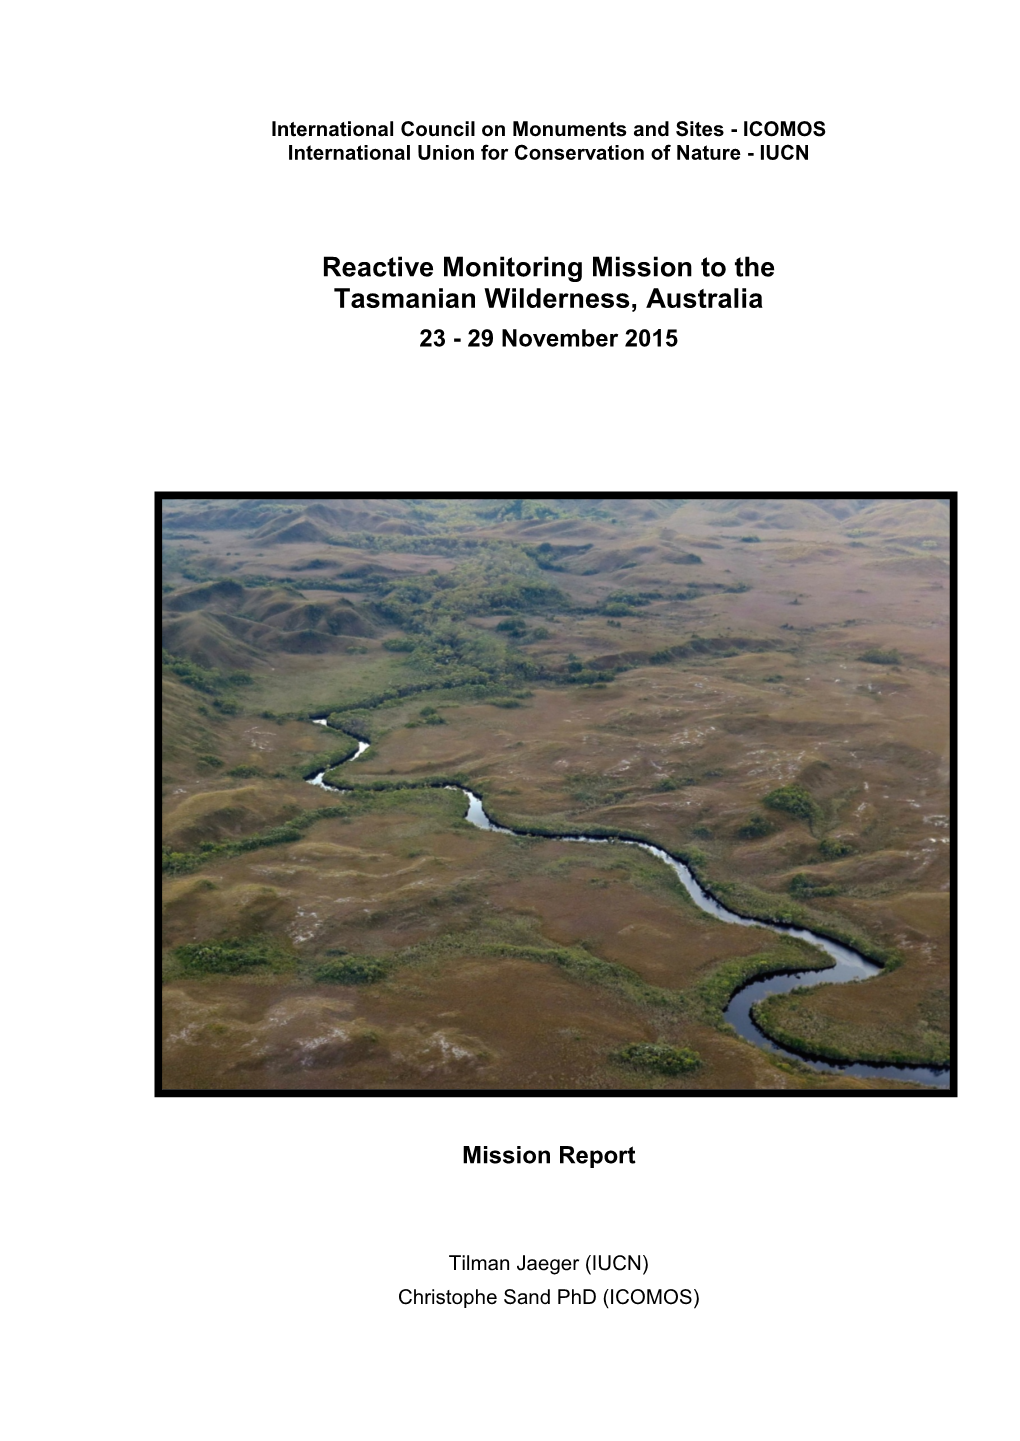 Reactive Monitoring Mission to the Tasmanian Wilderness, Australia 23 - 29 November 2015